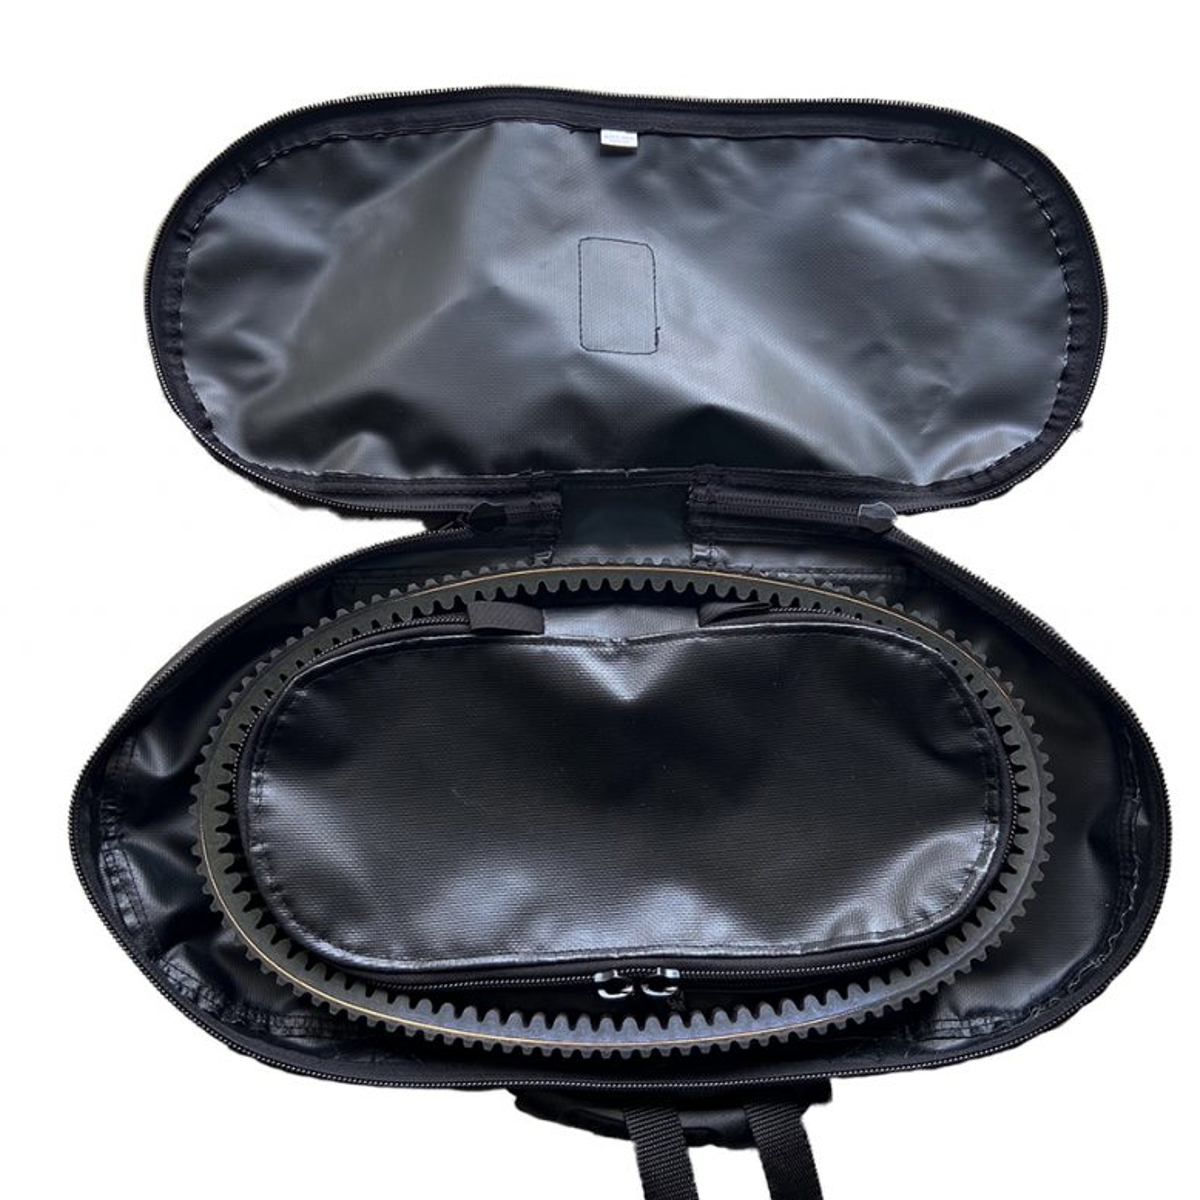 Polaris RZR Roll-Up Tool Kit and Spare Drive Belt Bag - BUNDLE